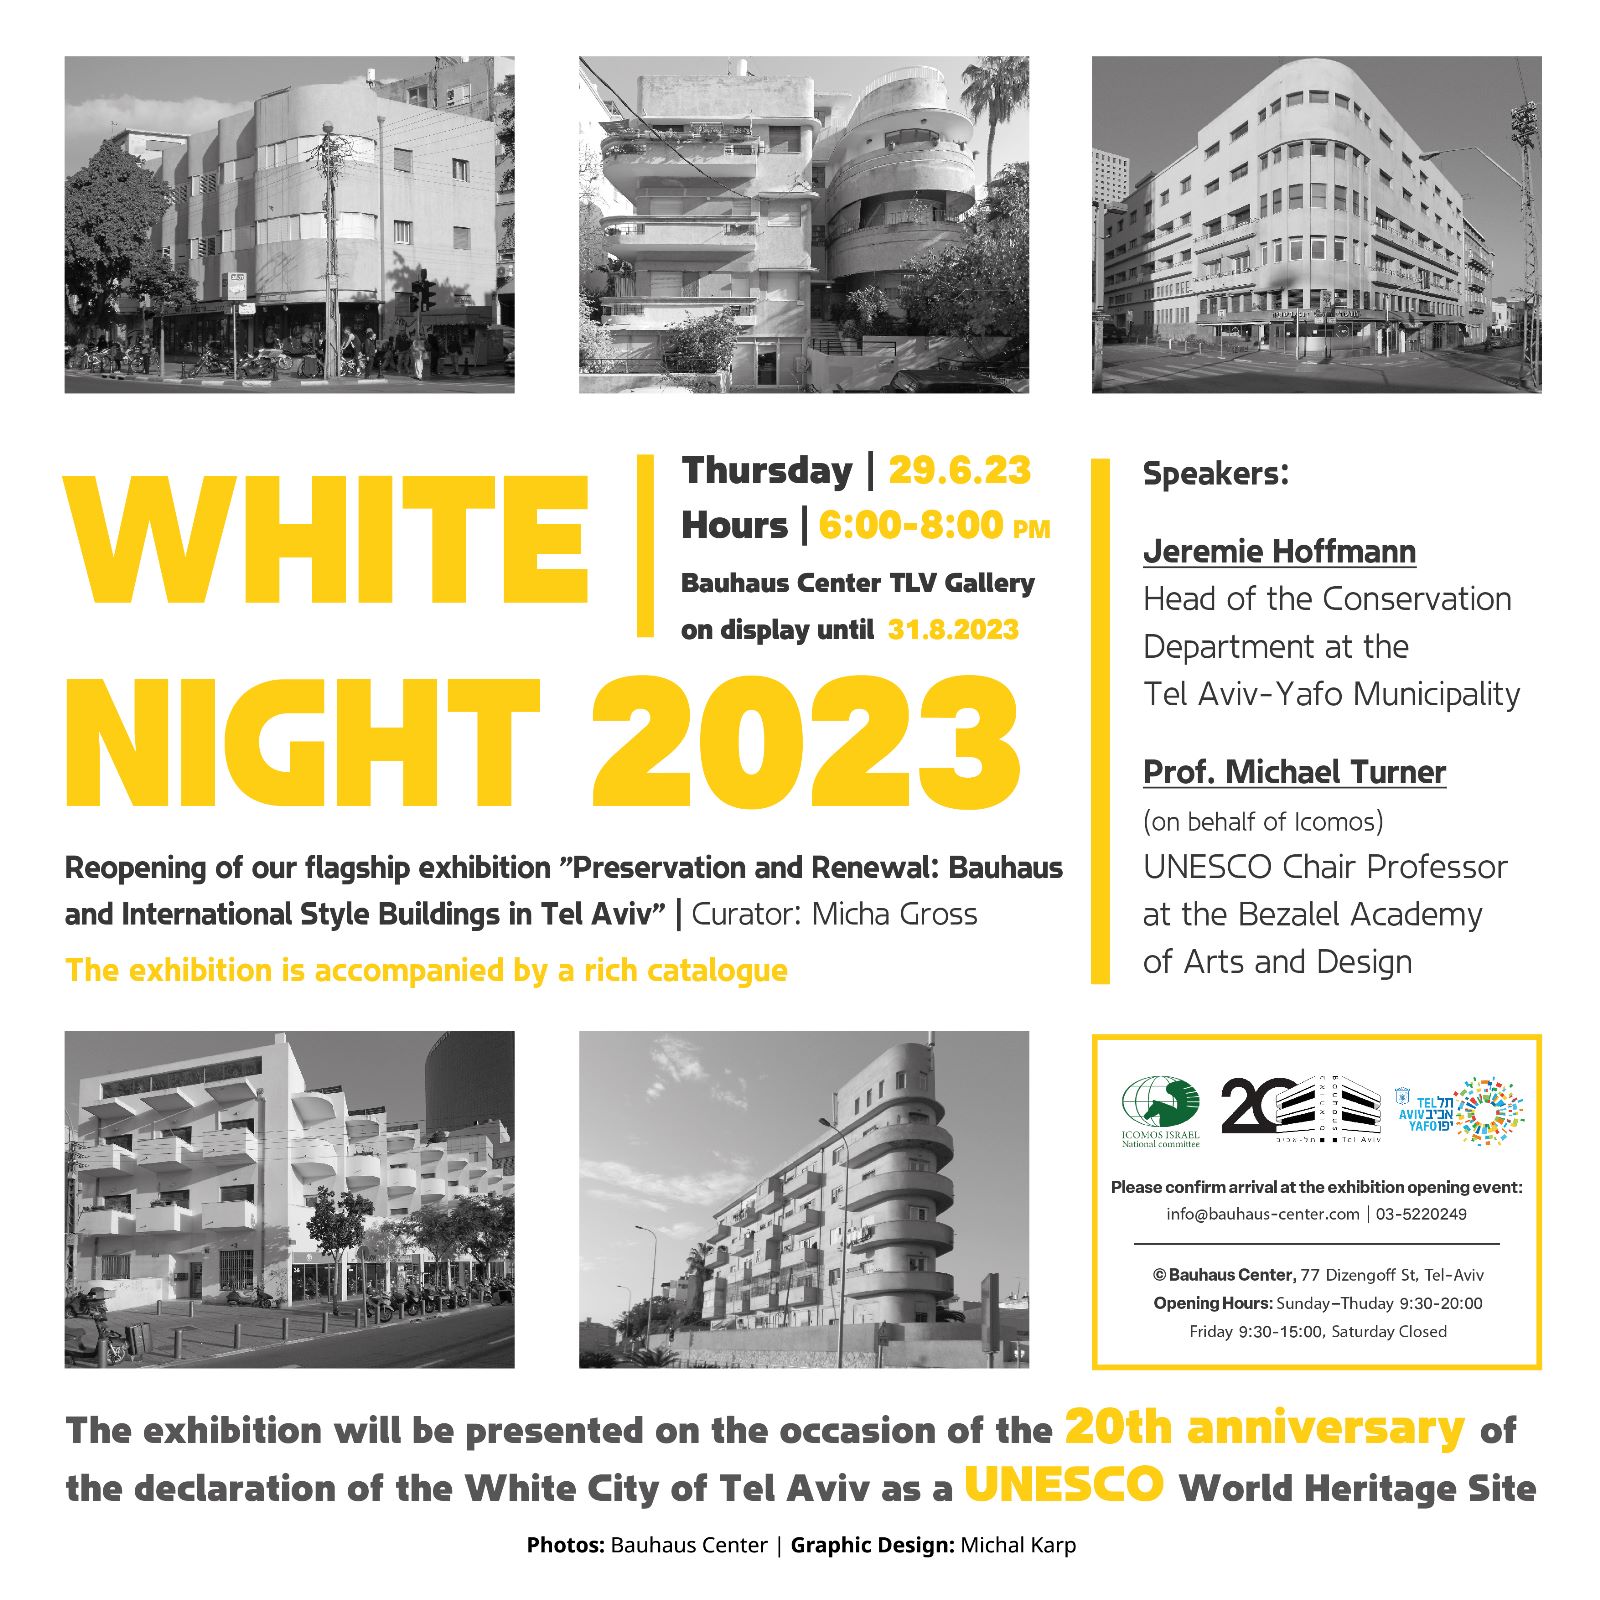 White Night 2023 at Bauhaus Center Tel Aviv!